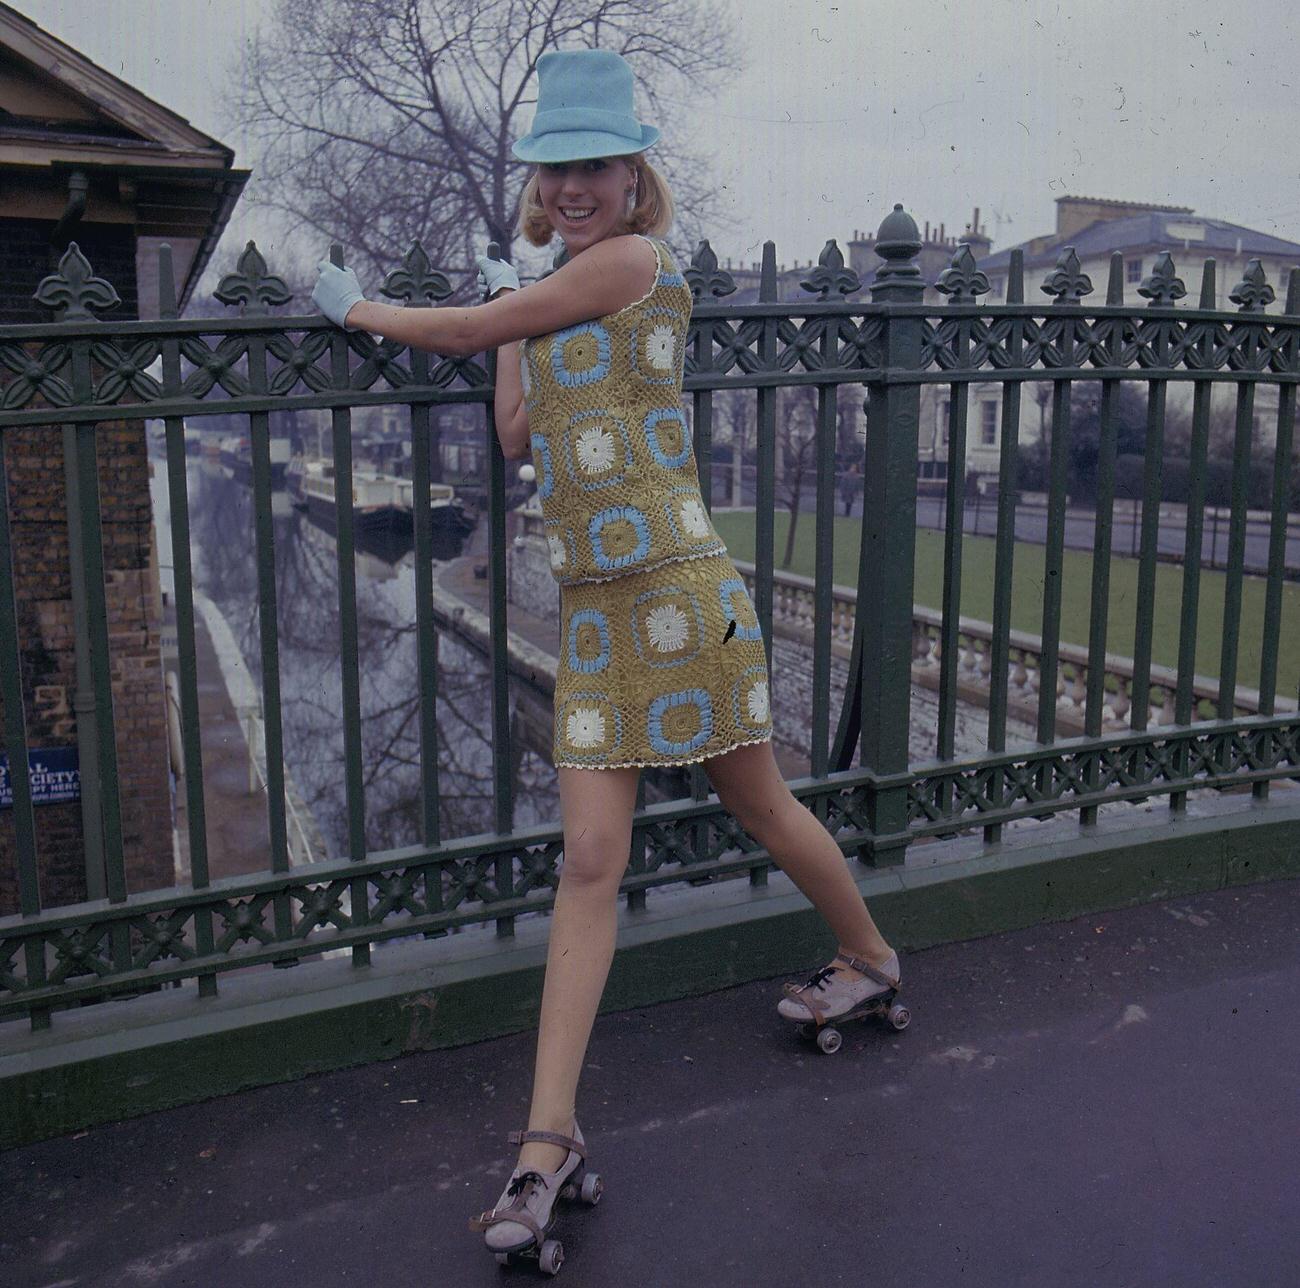 Model in Crochet Knit Outfit Roller Skating on Bridge, 1967